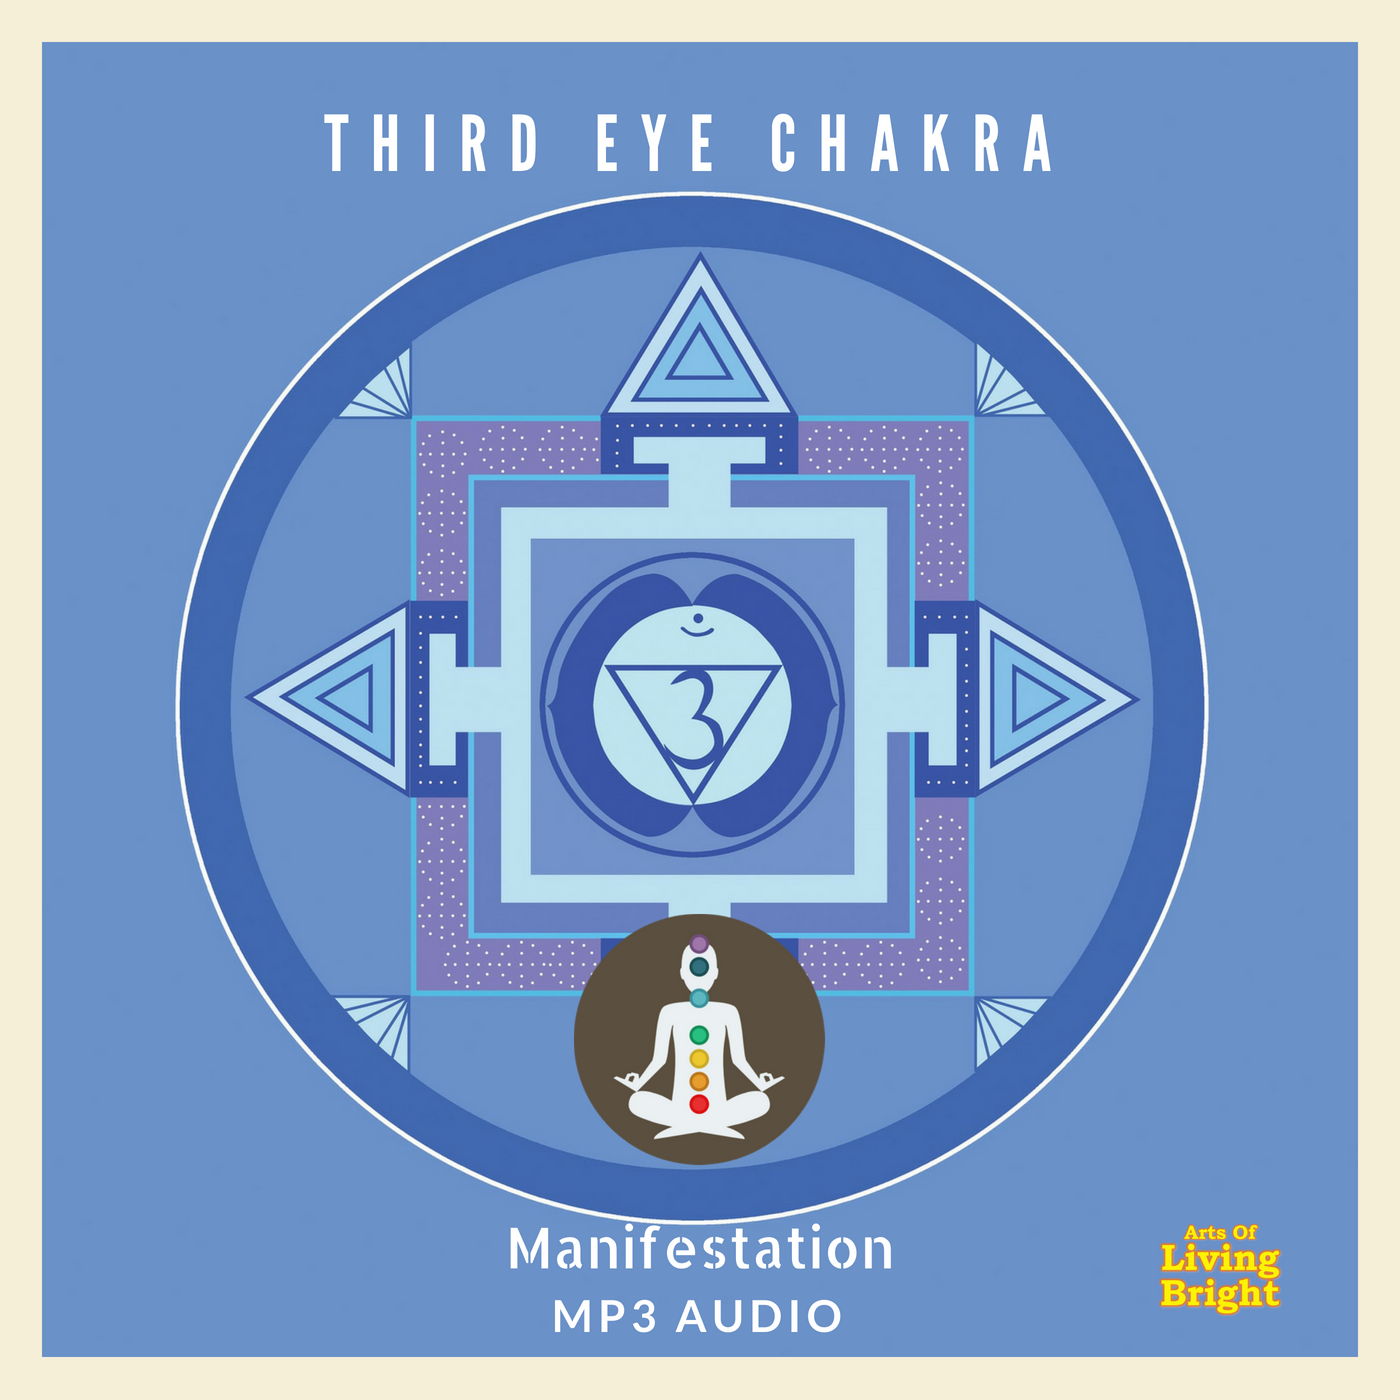 Third Eye Chakra